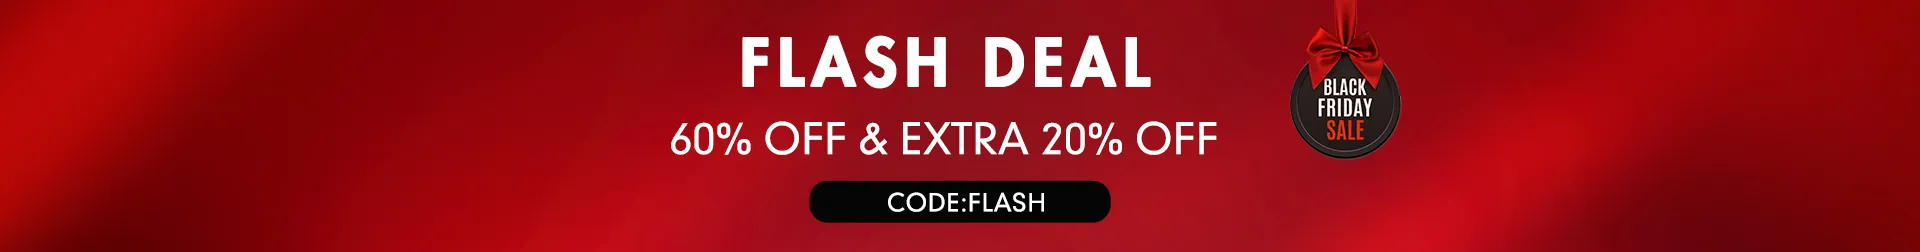 flash deal